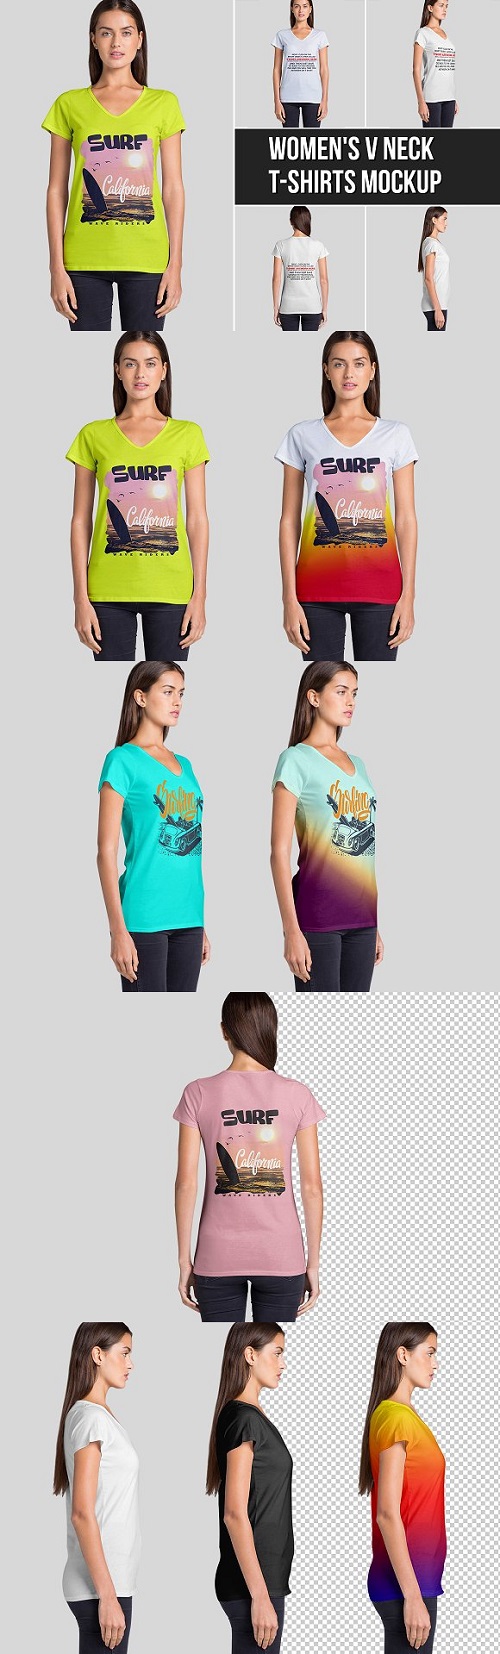 Women's V Neck T-Shirts Mockup 1414587